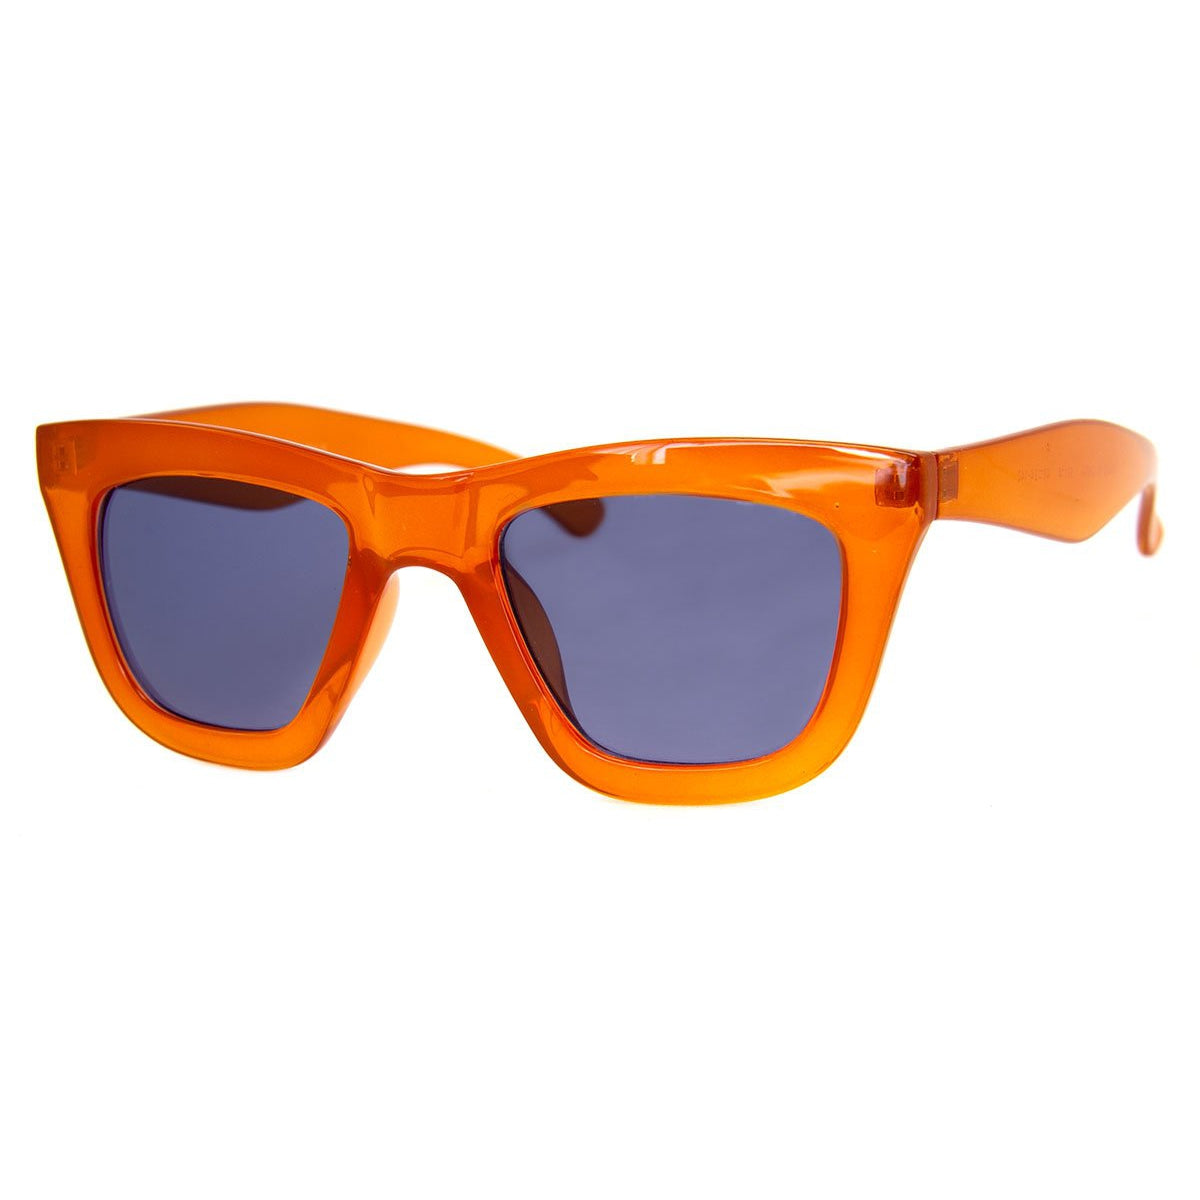 Finwood Sunglasses - Orange/Blue